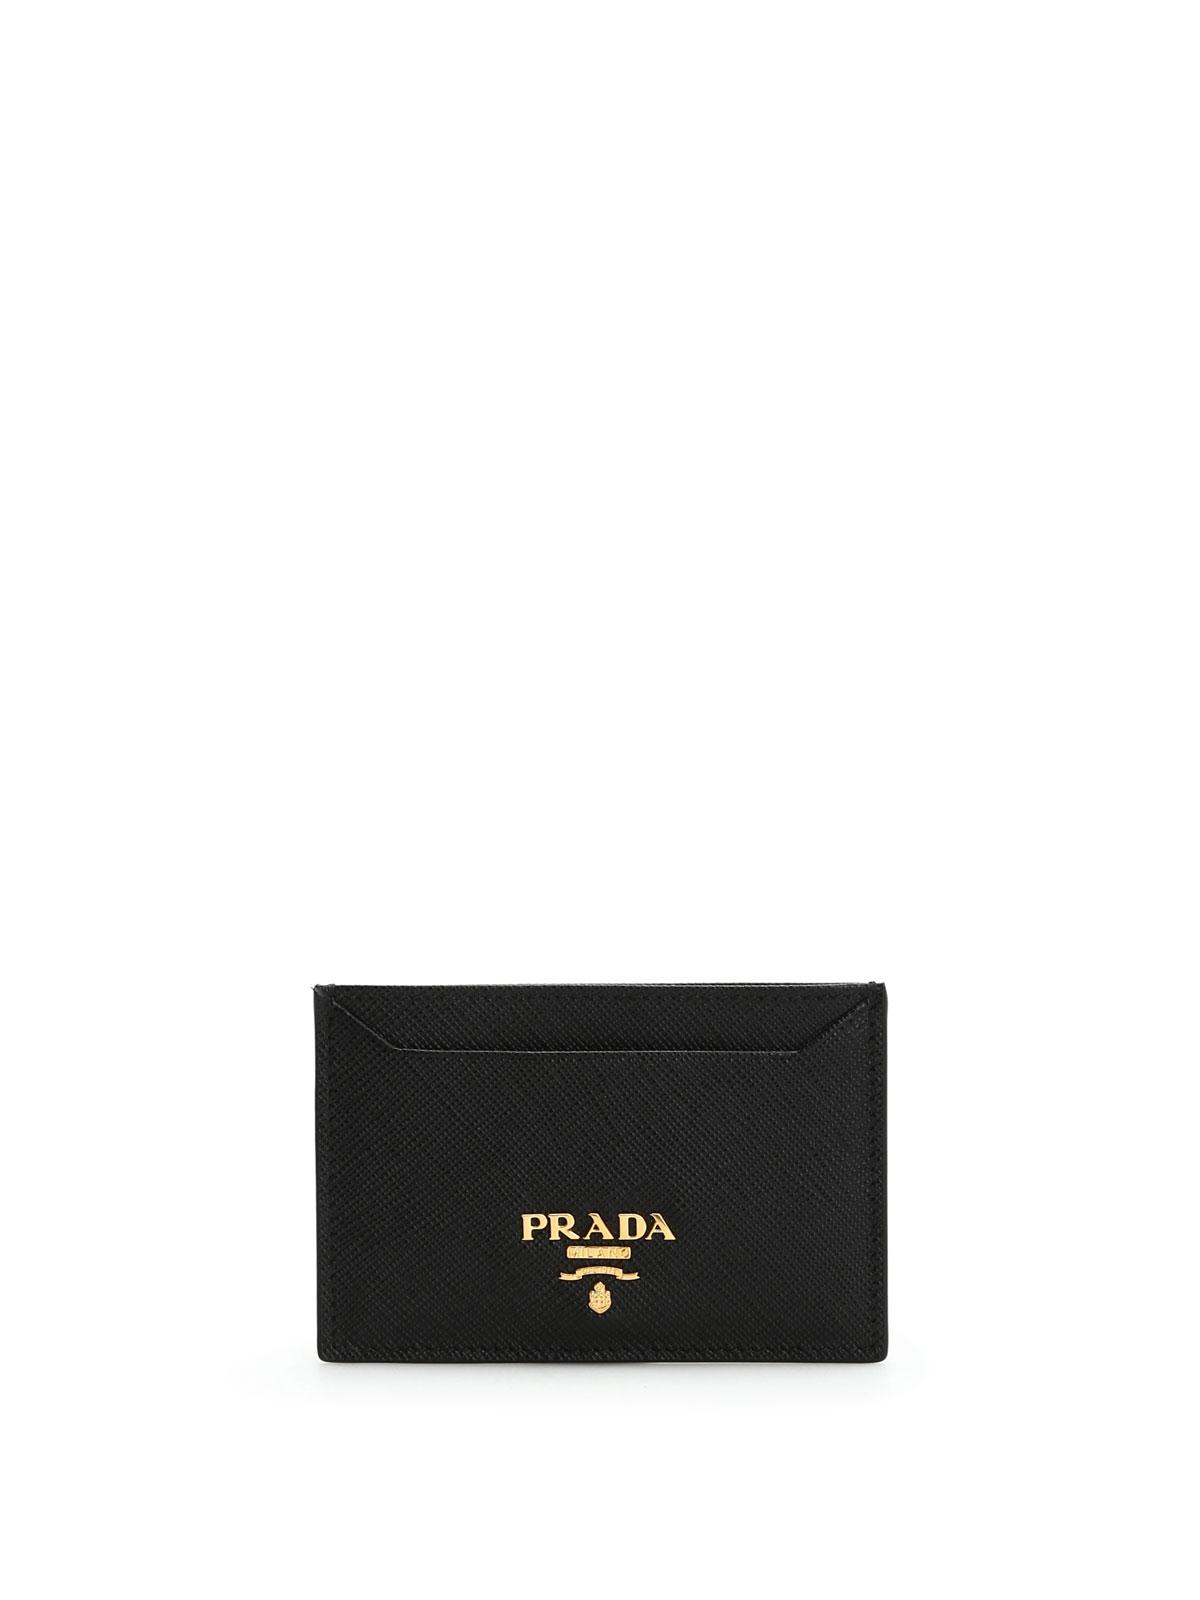 Prada Leather Credit Card Holder in Black for Men - Lyst